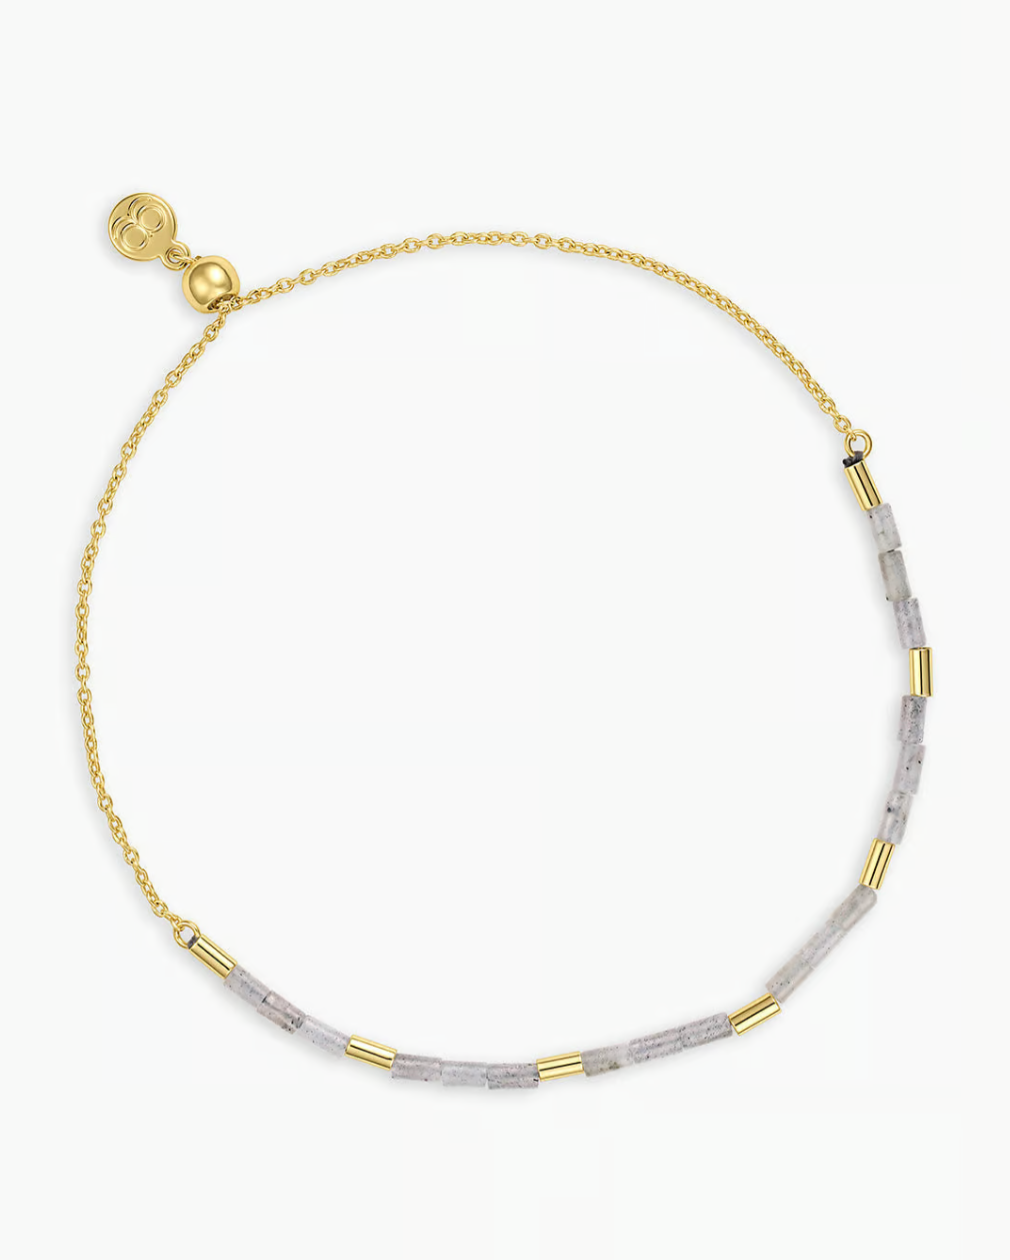 Power gemstone tatum bracelet for balance - gold / labradorite